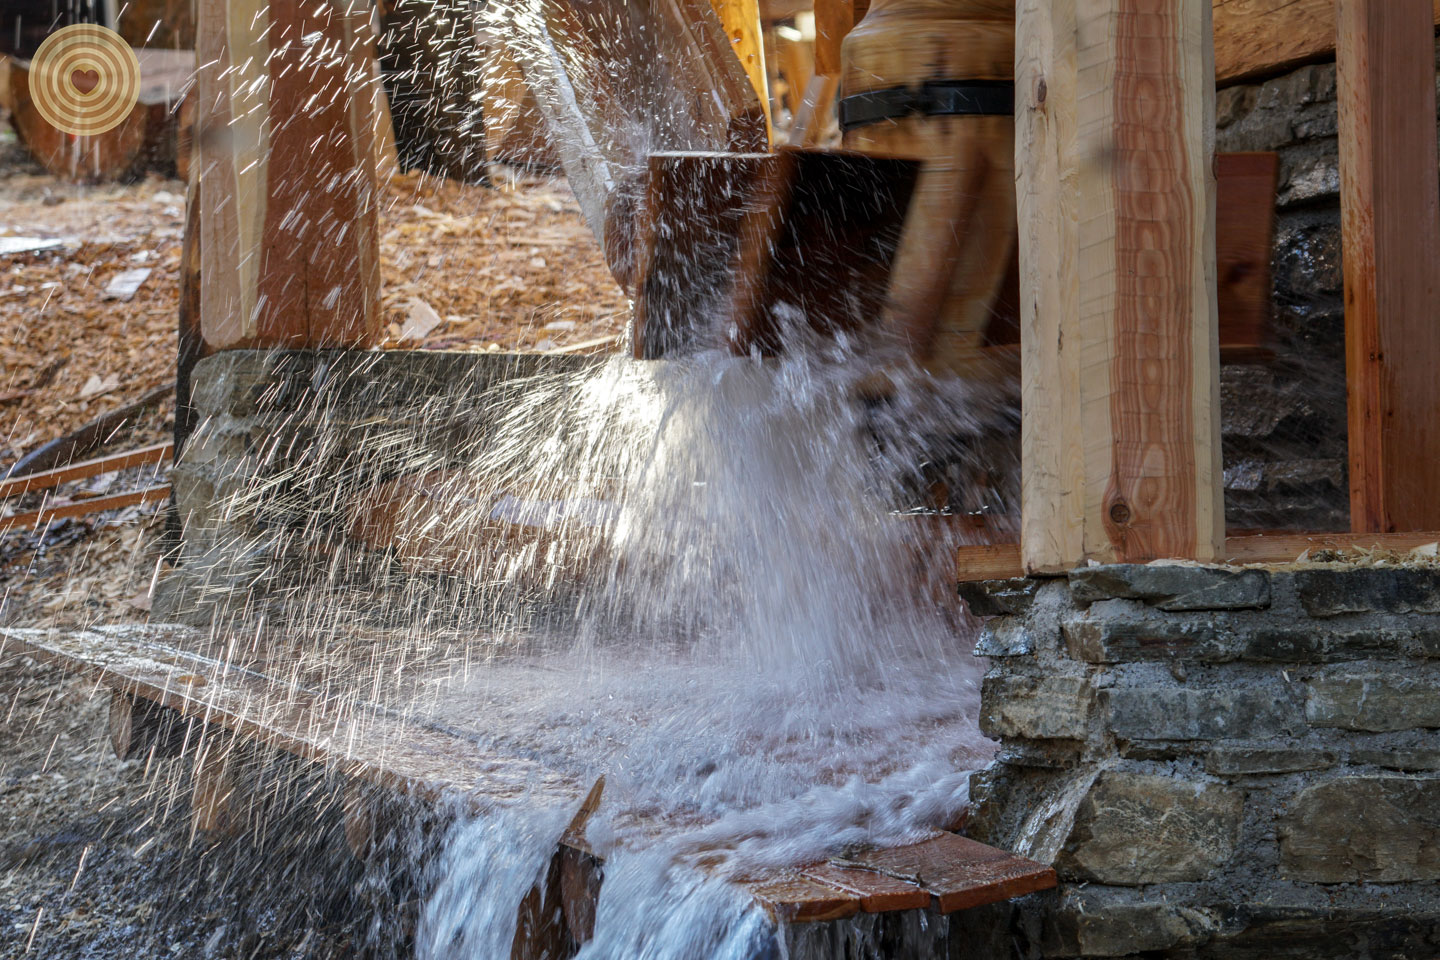 Wood Architecture, Water Mill Project, 2019 WWD, Austria